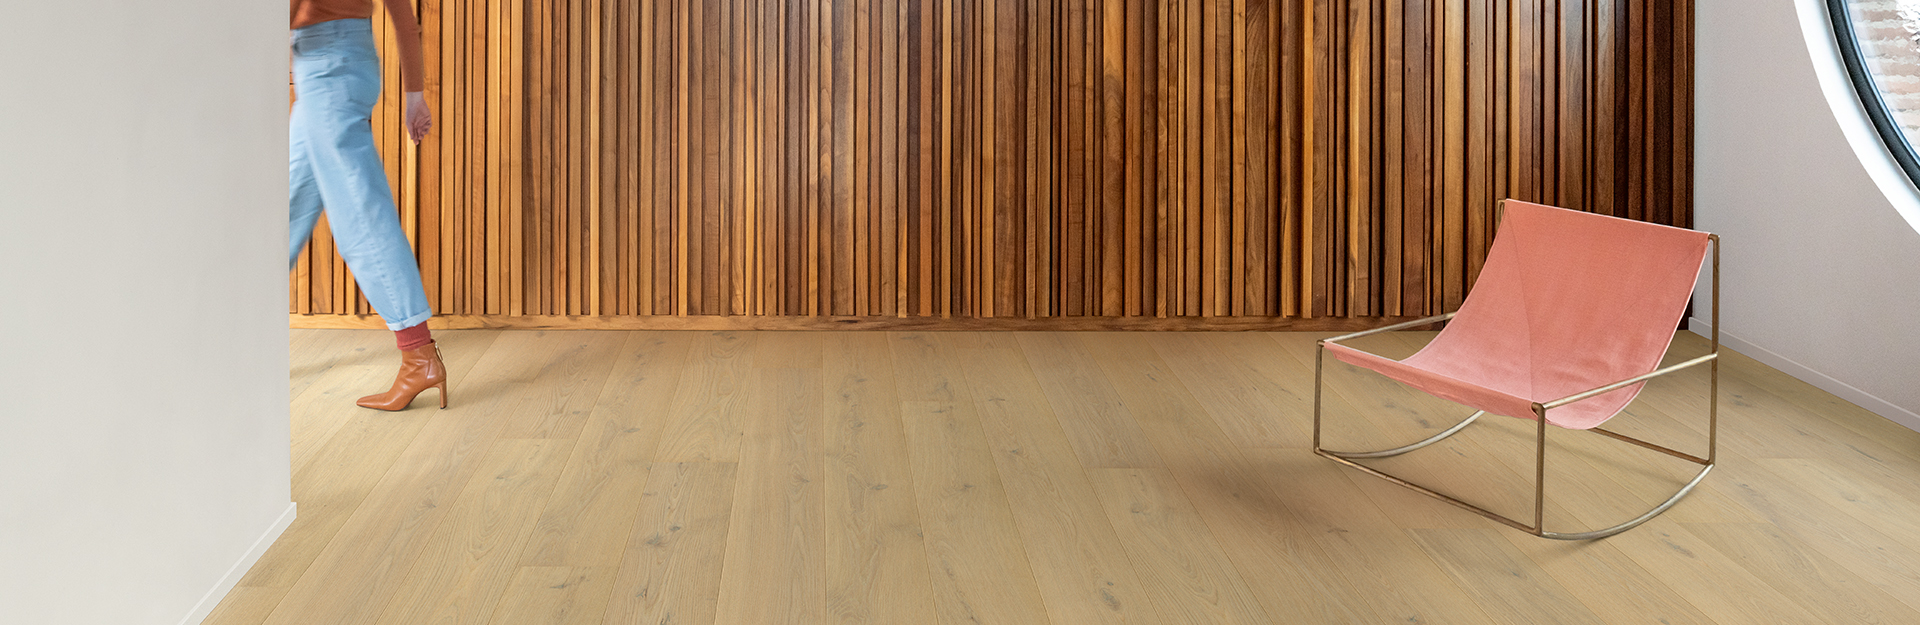 Quick-Step Cascada water-resistant hardwood flooring